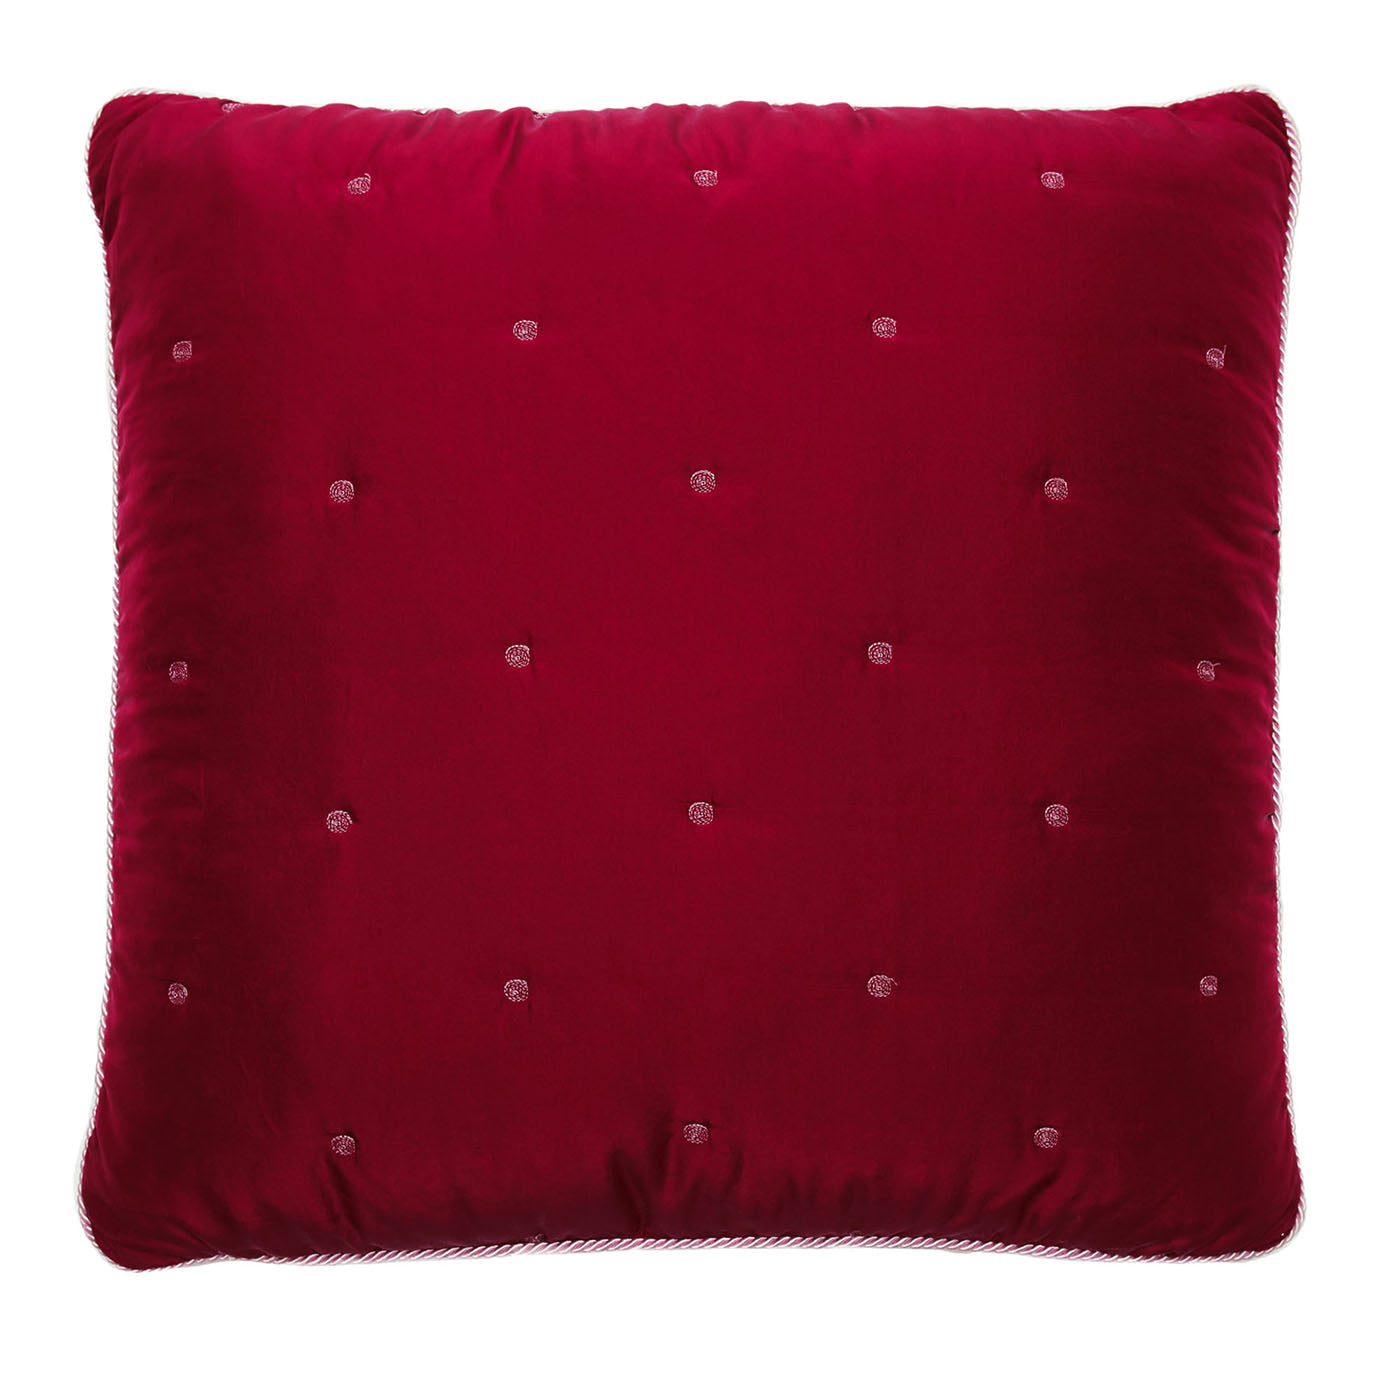 Pijama Party Red Decorative Cushion - Main view